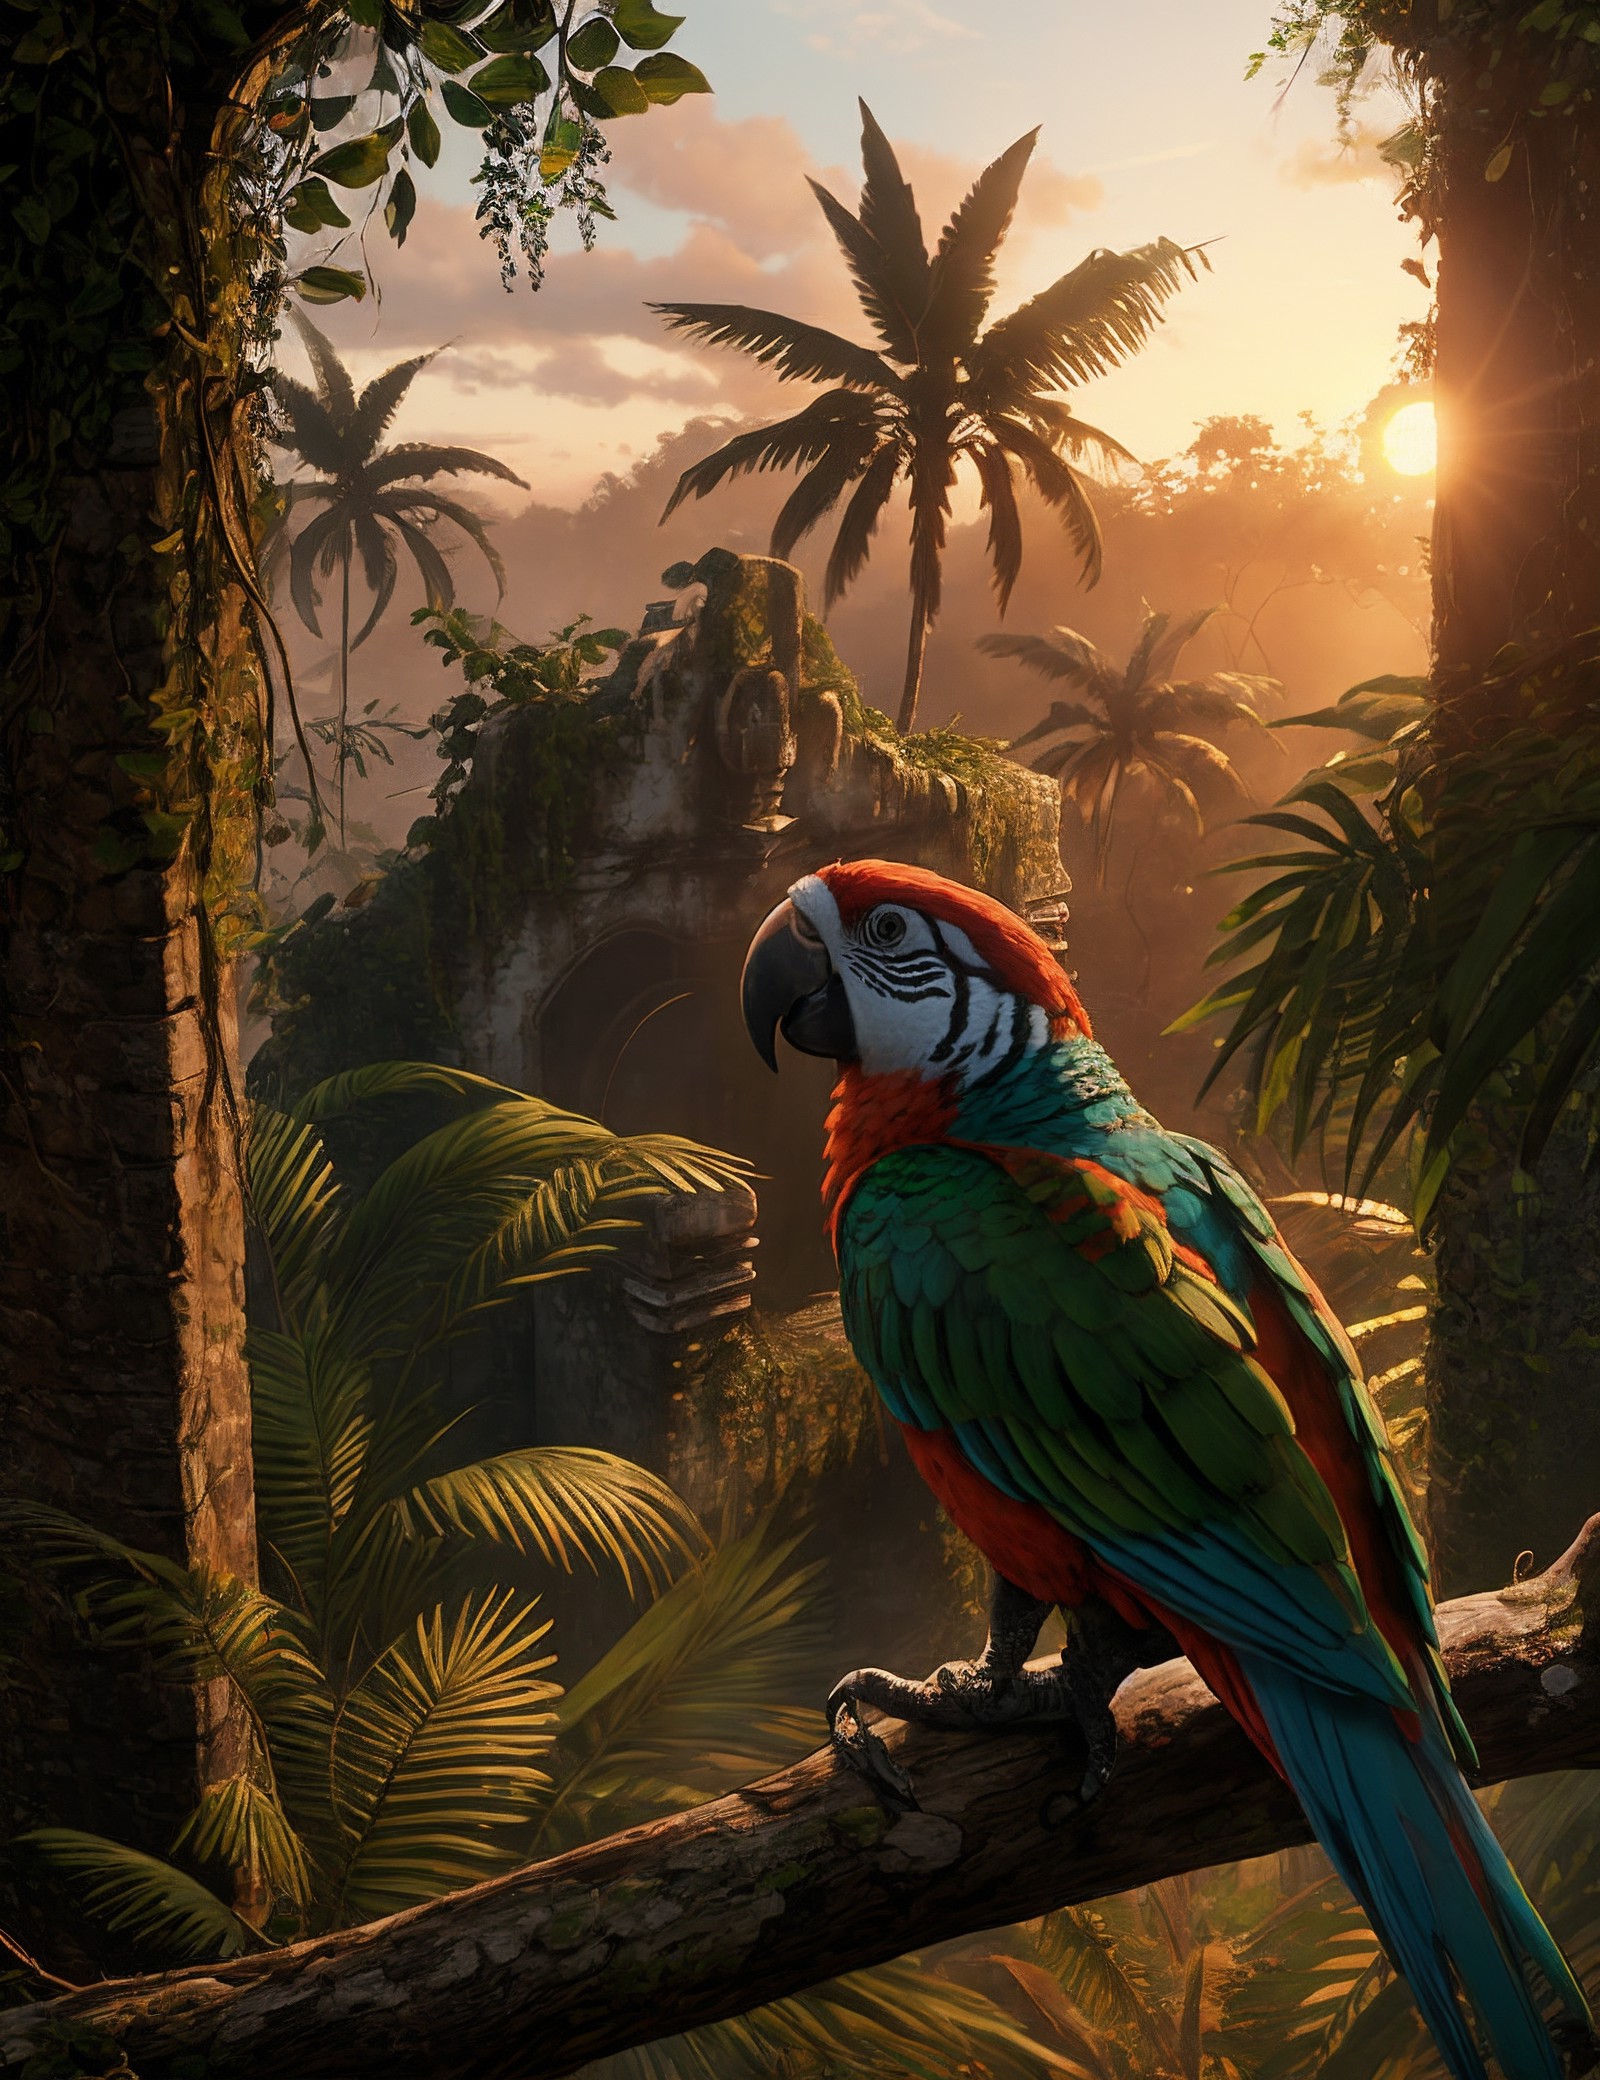 a parrot sits on a branch, jungle ruin in cav_rdrguarma,
sunset  
8k dslr photograph with film grain
<lora:cav_rdrguarma:.6>